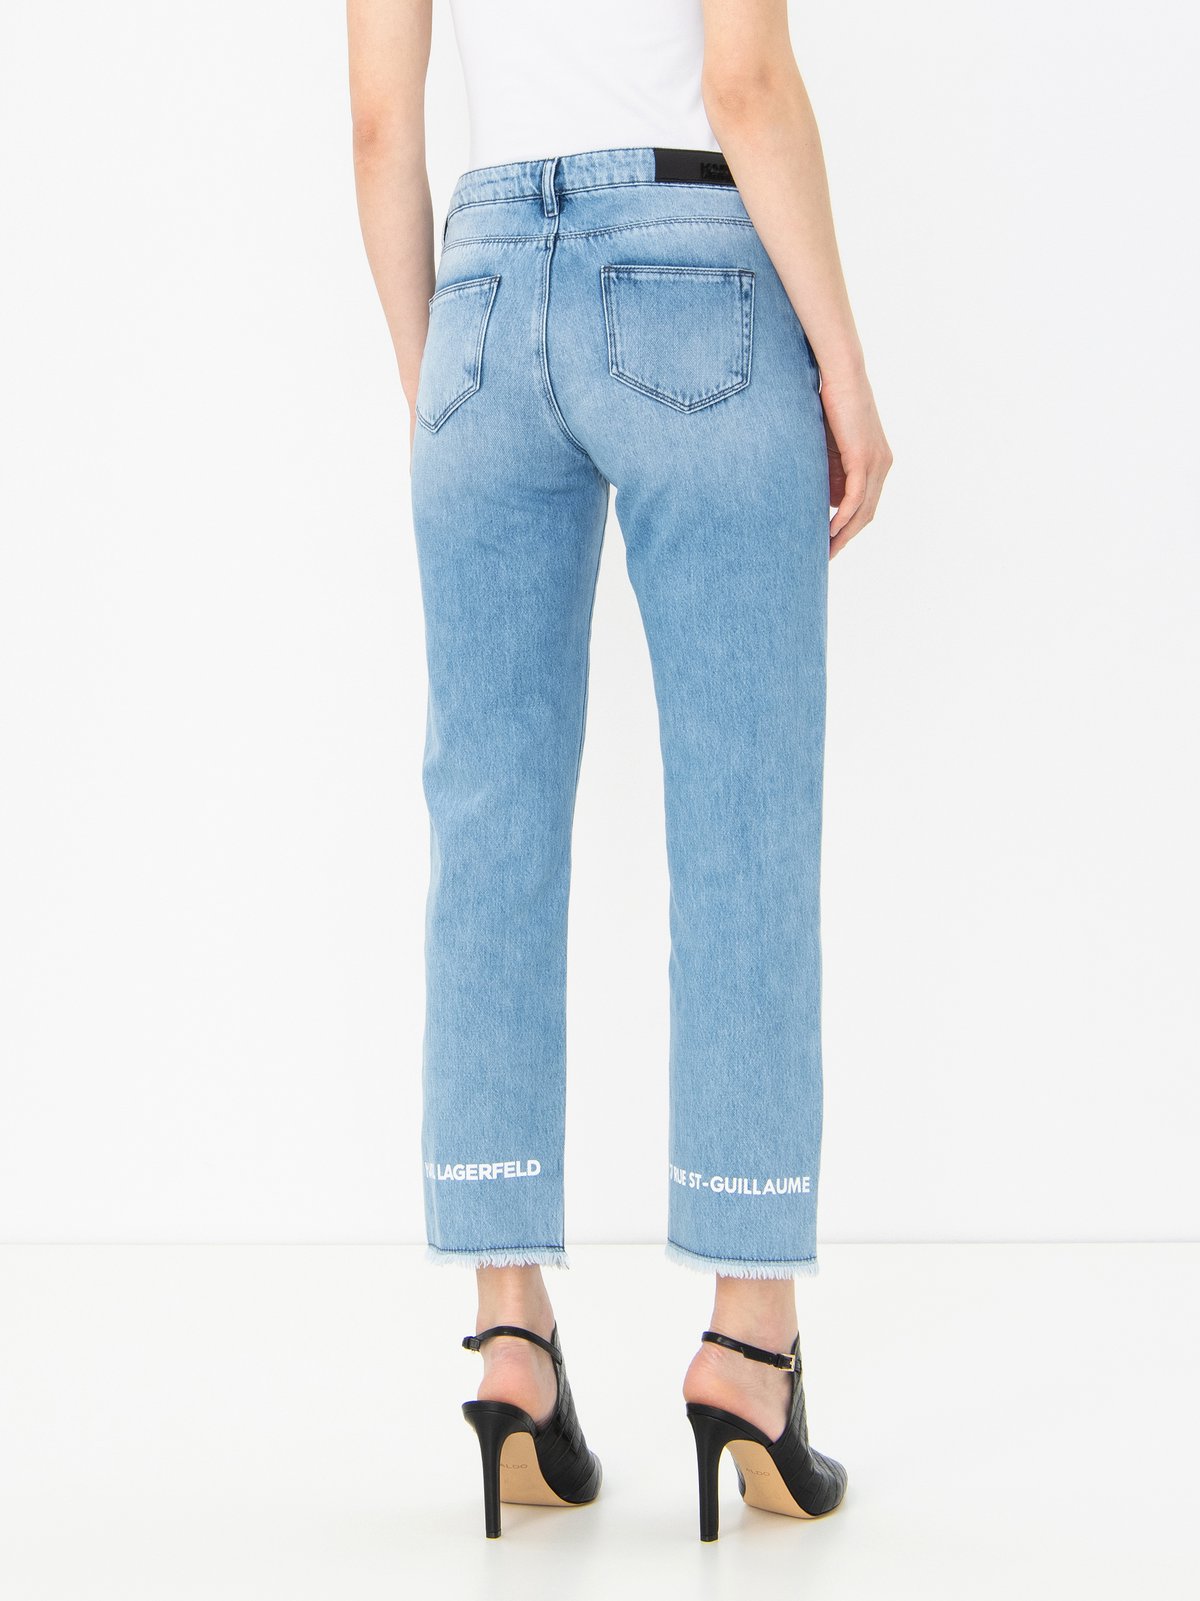 Karl Lagerfeld Paris Women's Straight-Leg Jeans